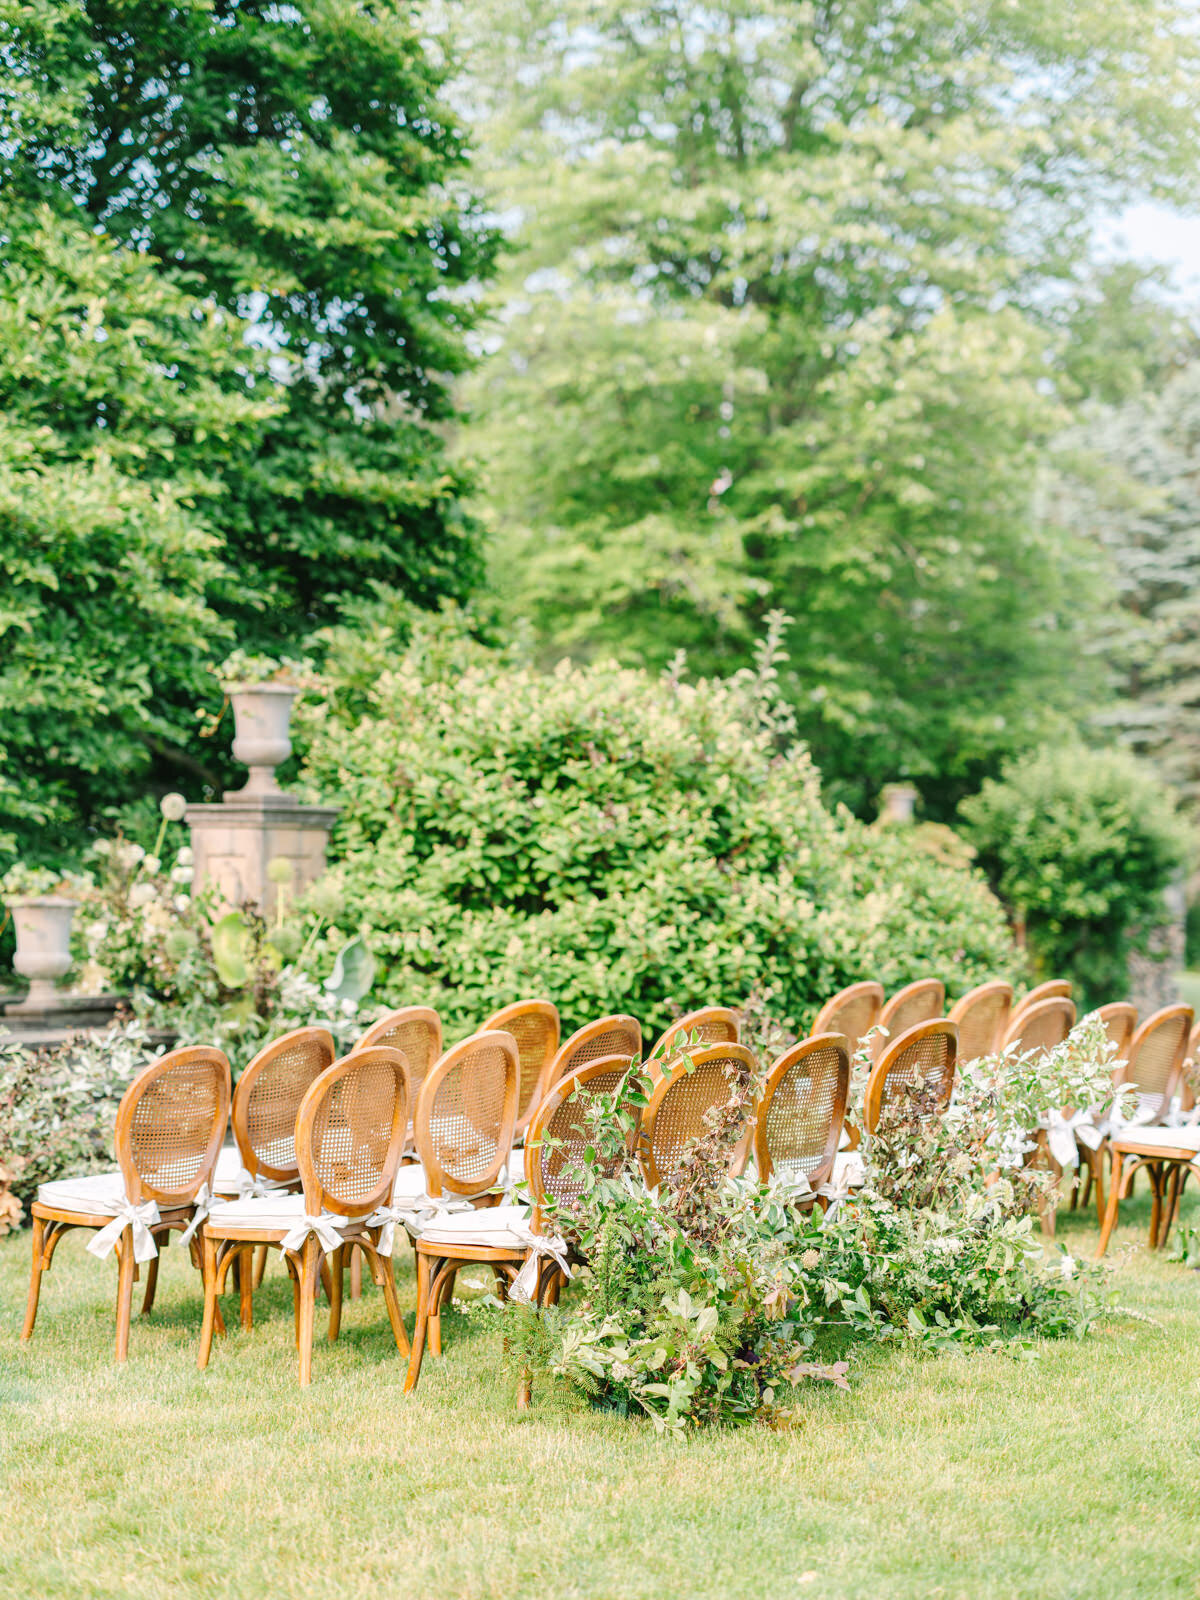 greencrest-manor-ceremony-michigan-wedding-kassieanaphotography.com